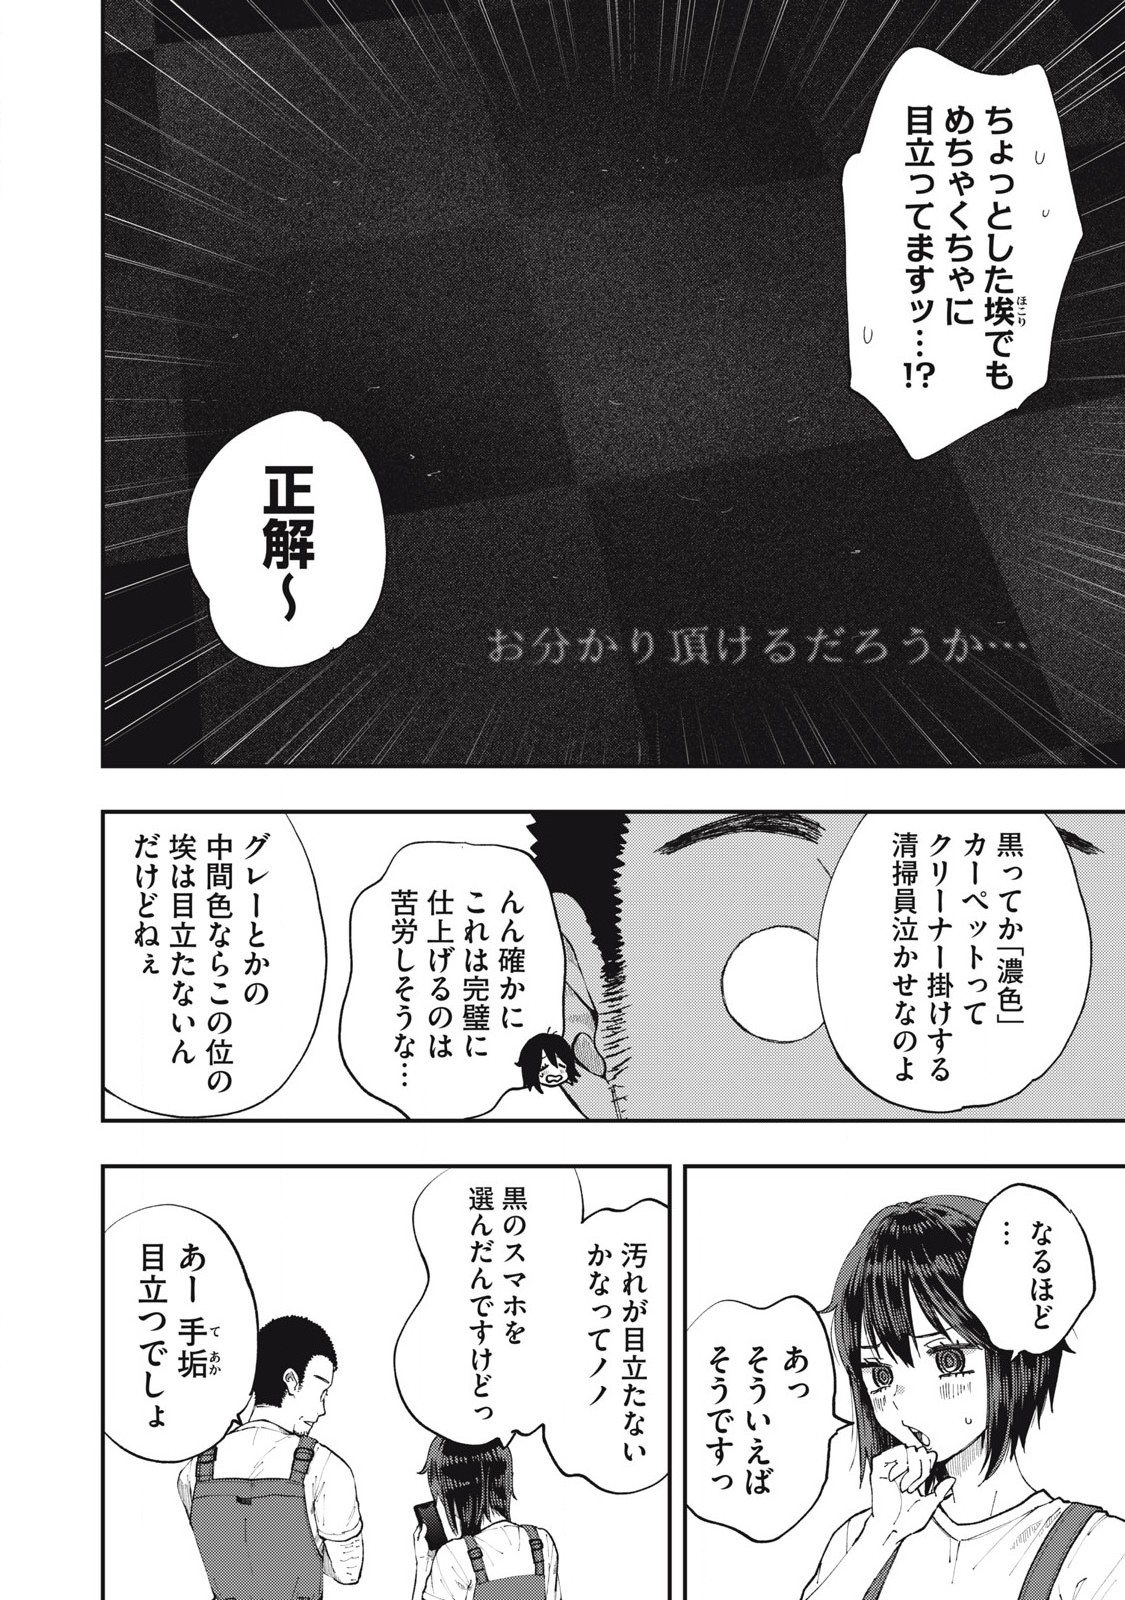 Seisouin Nono-chan Kyou no Tsubuyaki - Chapter 4 - Page 10